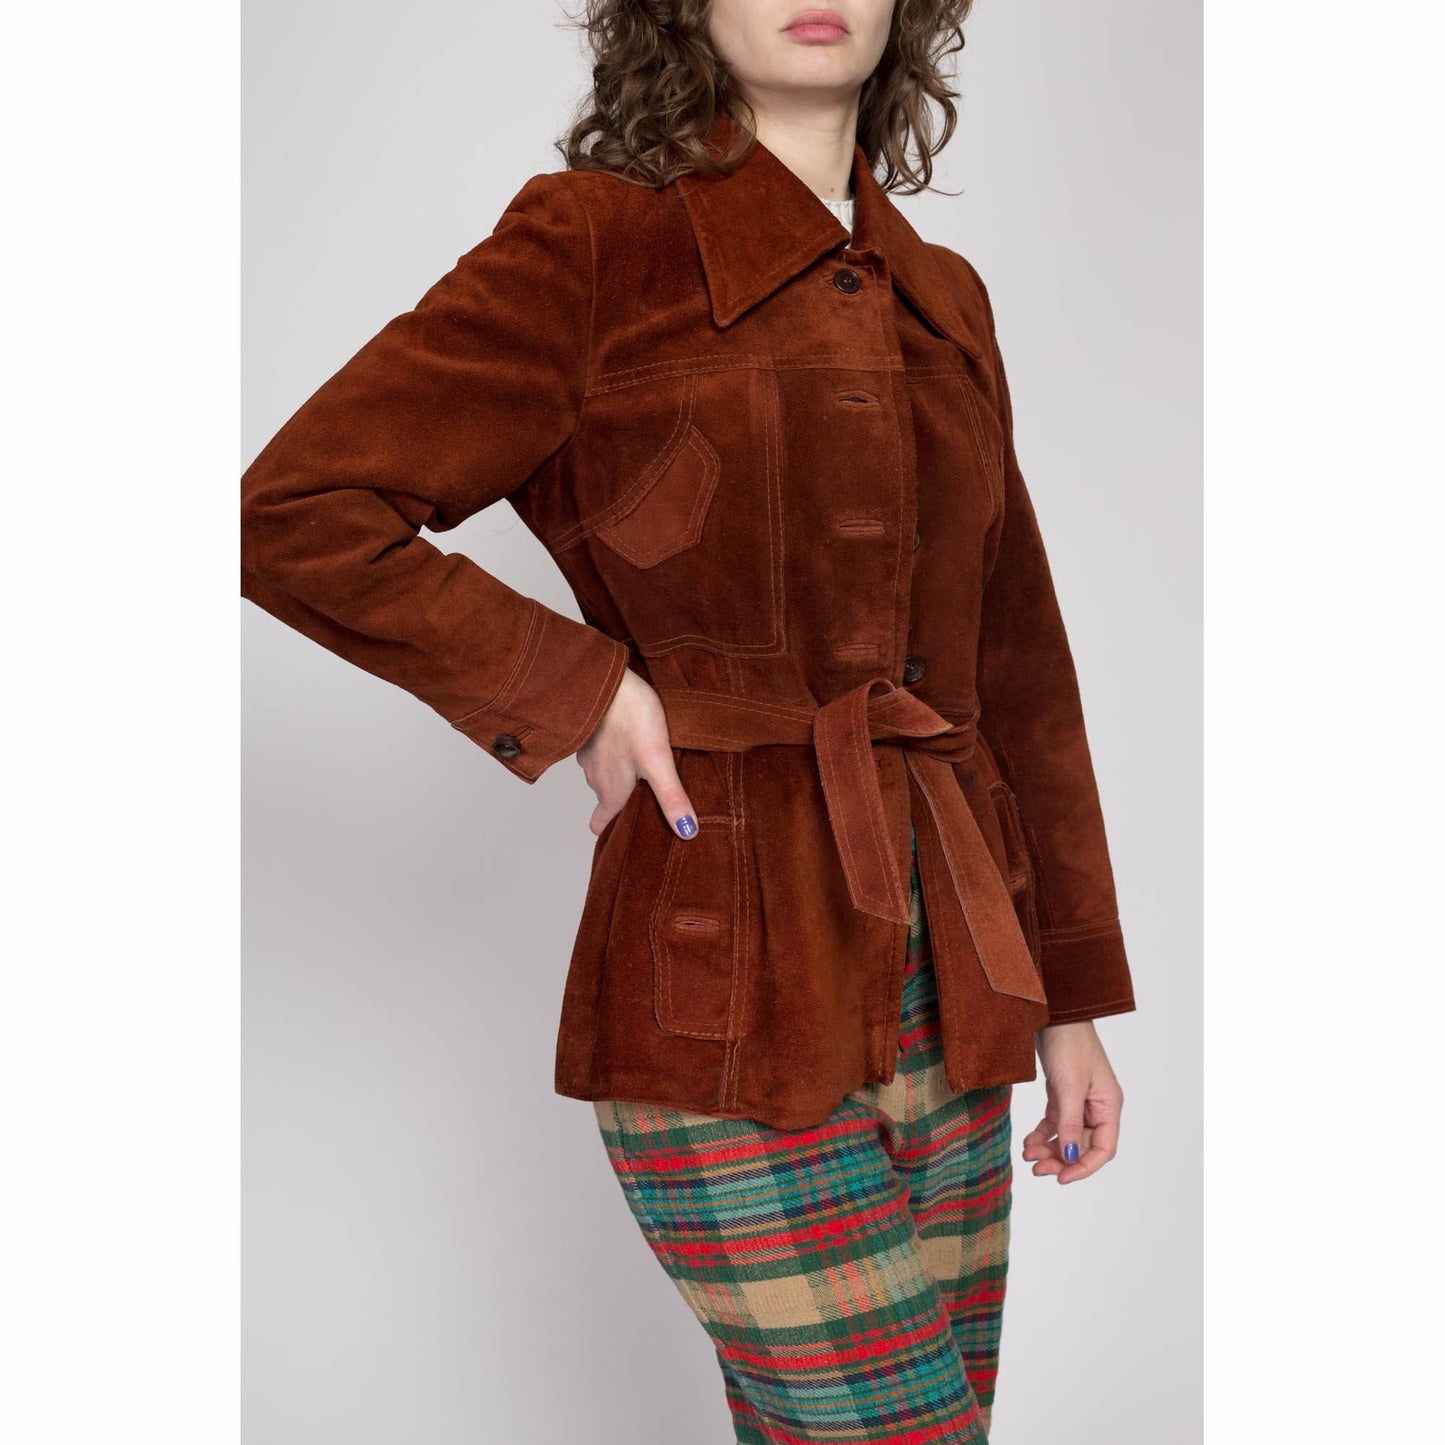 Small 70 Burnt Orange Suede Belted Jacket | Vintage Made In Argentina Button Up Boho Leather Coat